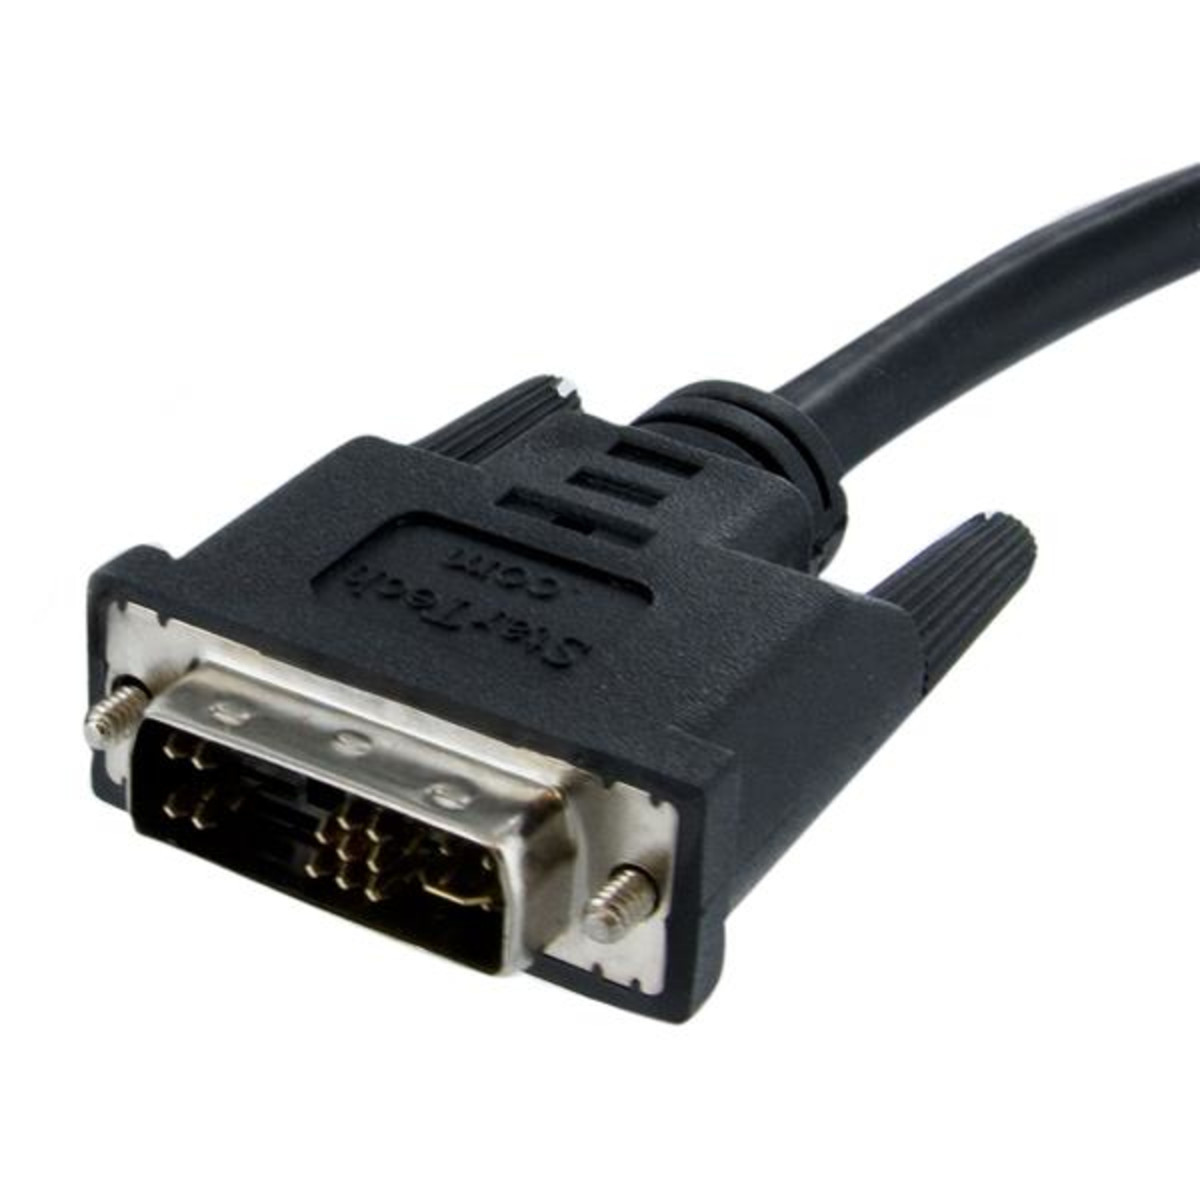 2m DVI to VGA Display Monitor Cable